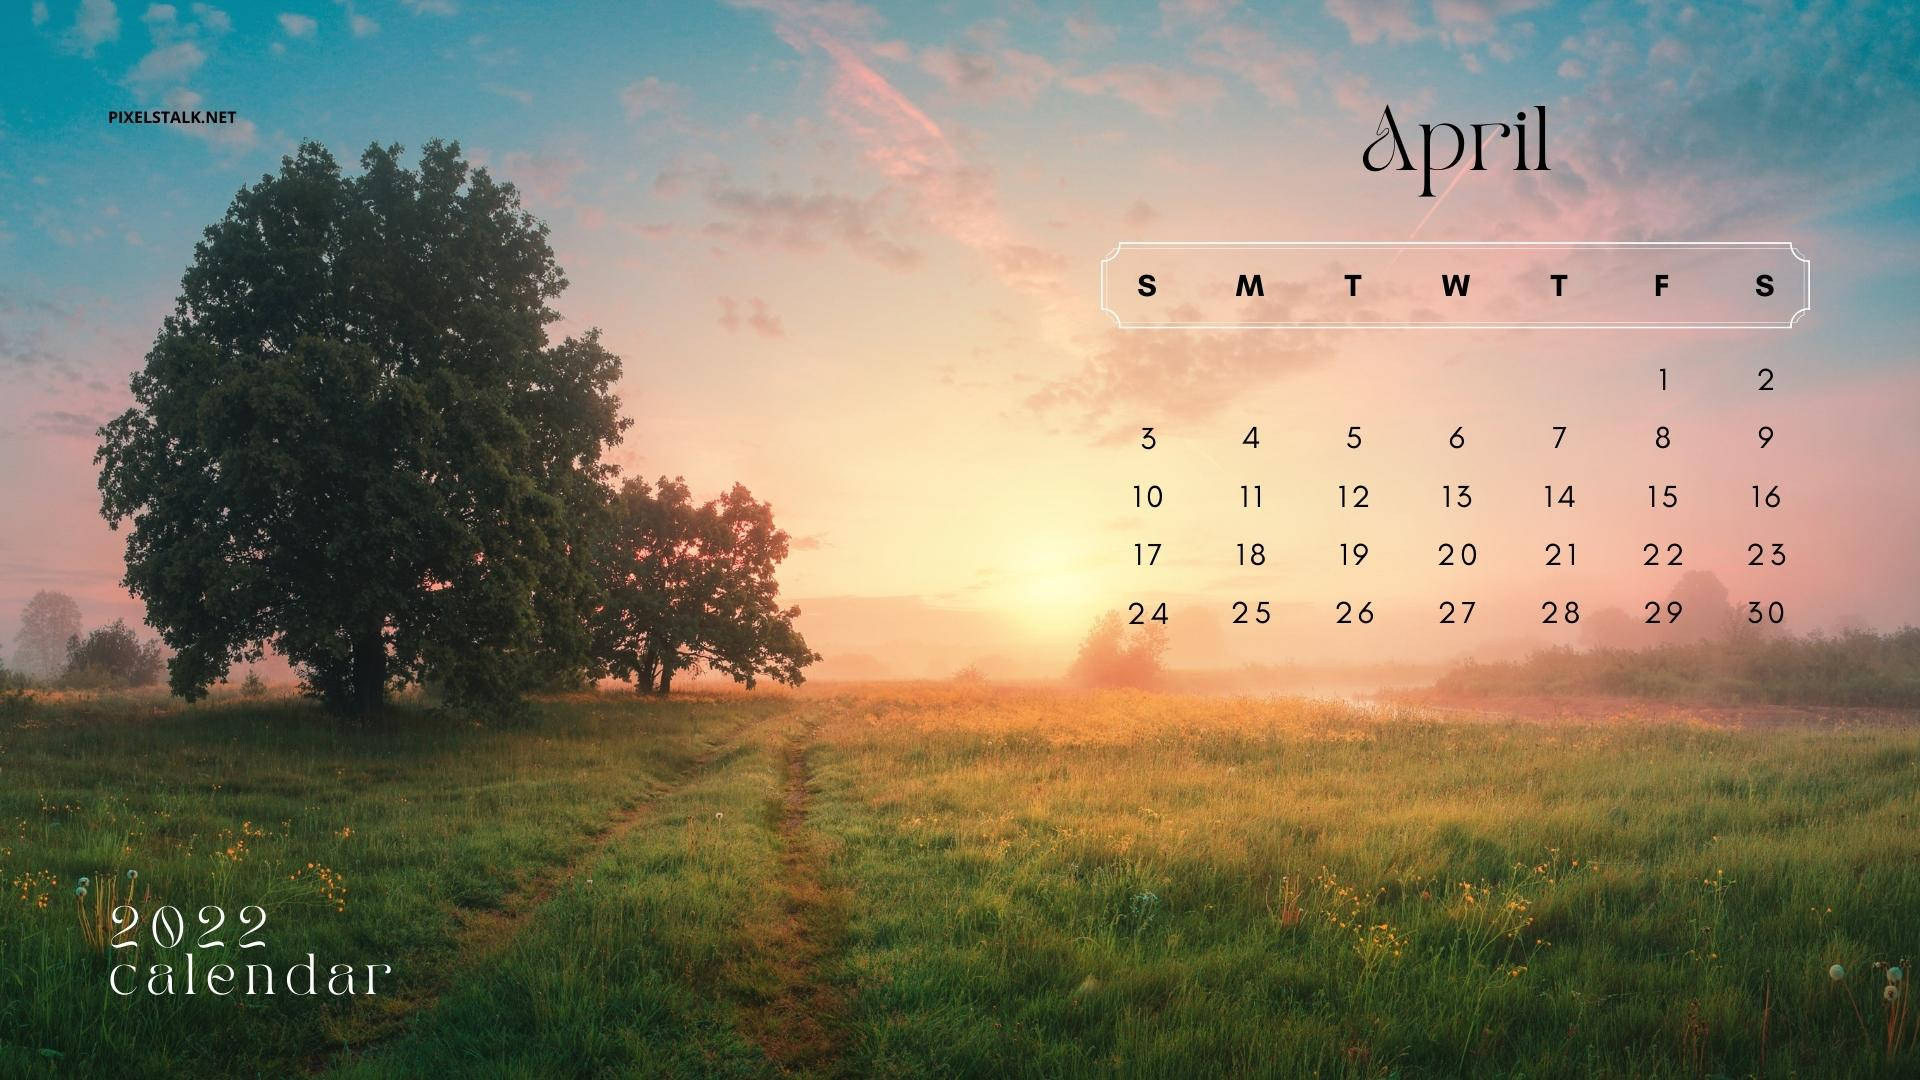 April 2022 wallpapers  55 FREE calendars for your desktop  phone